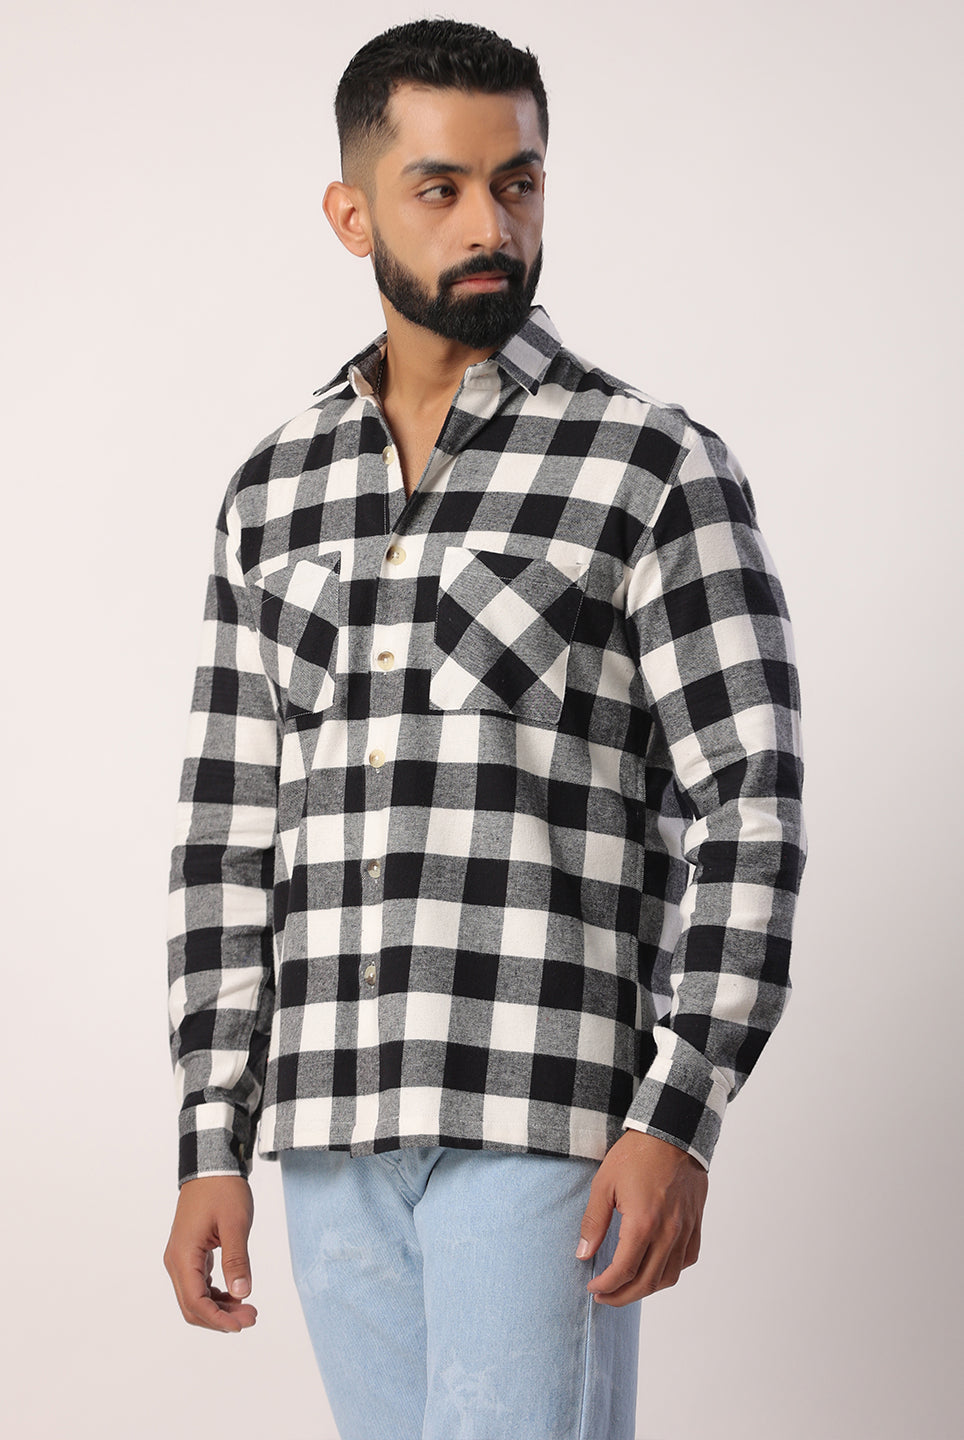 cotton check shirt for men